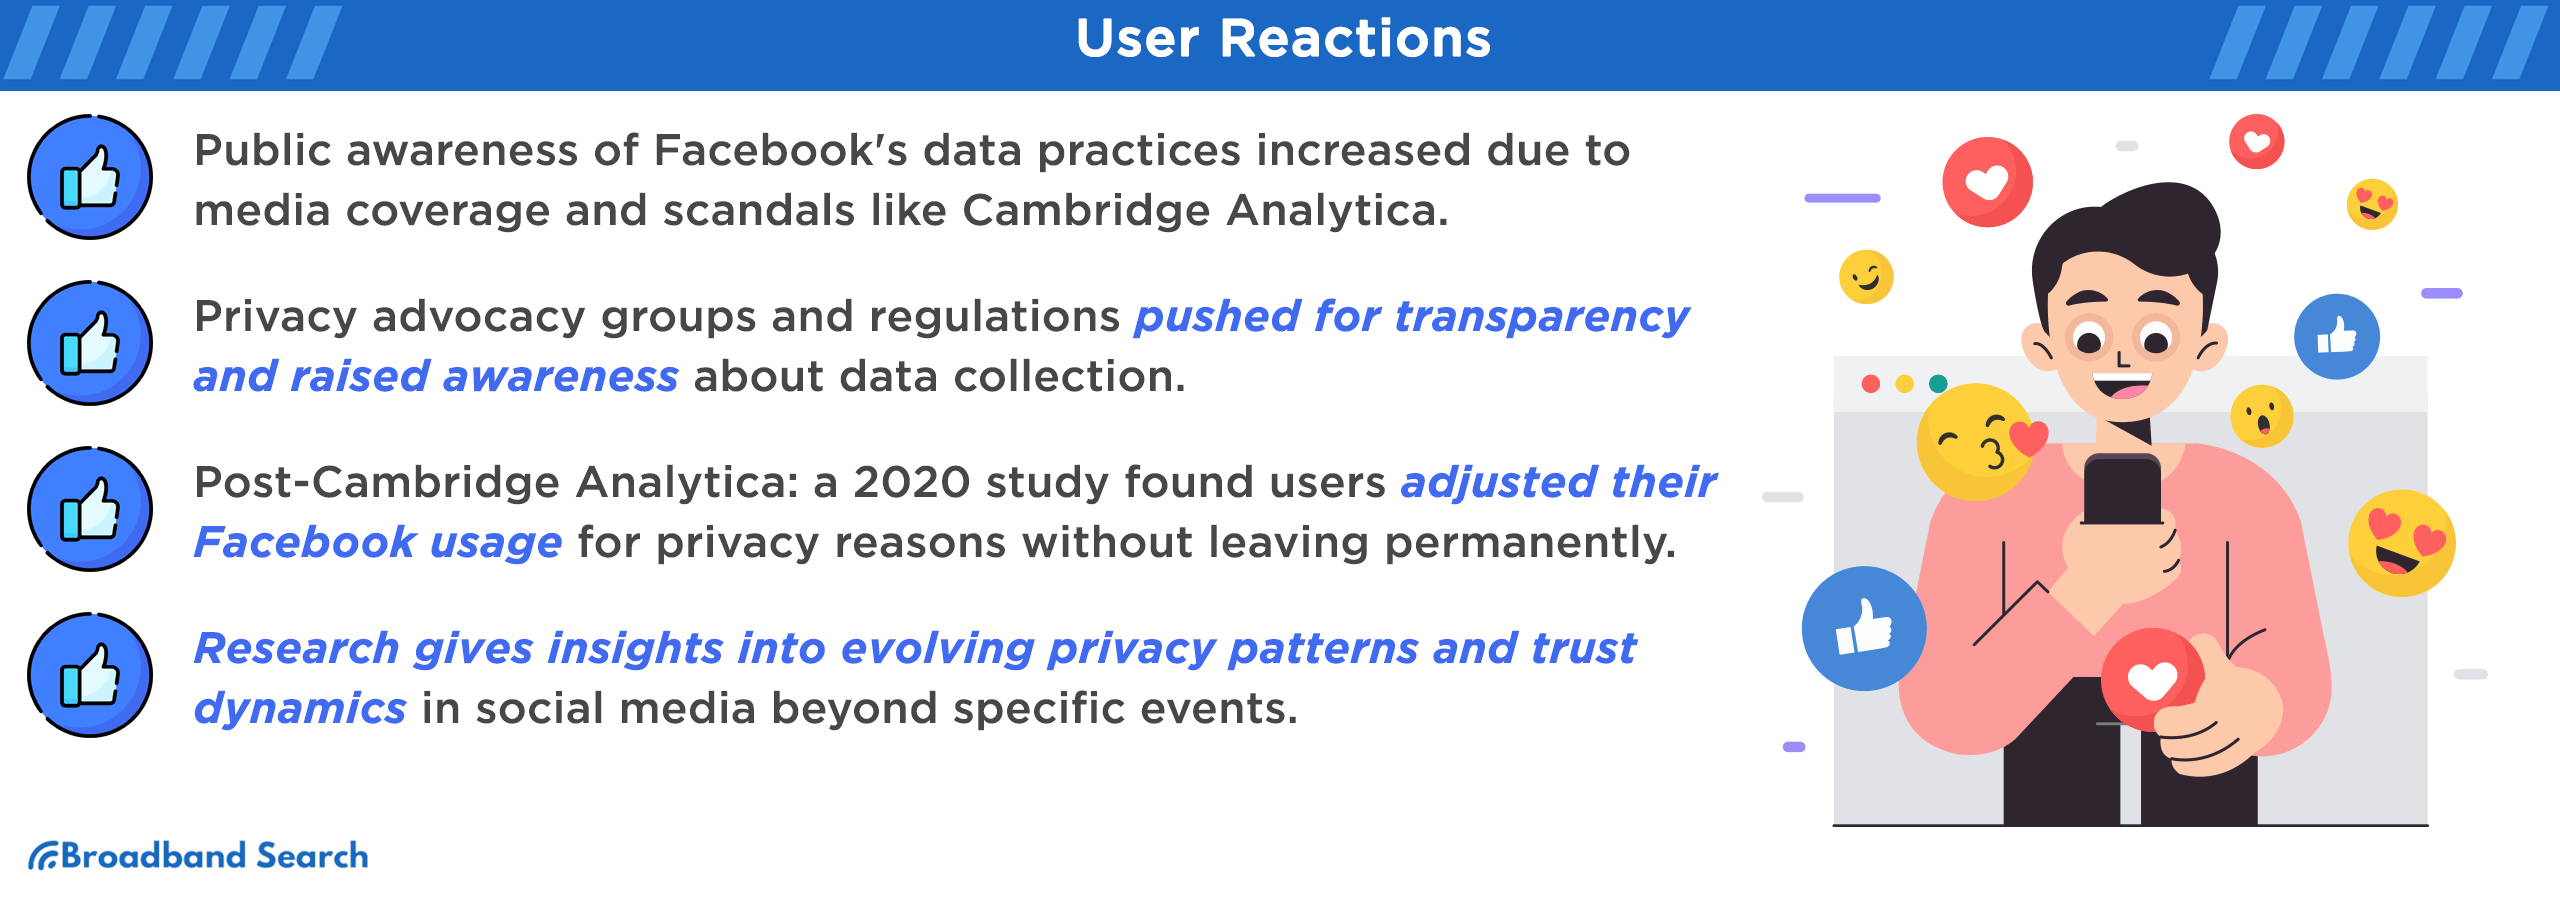 User reactions regarding privacy concerns surrounding facebook